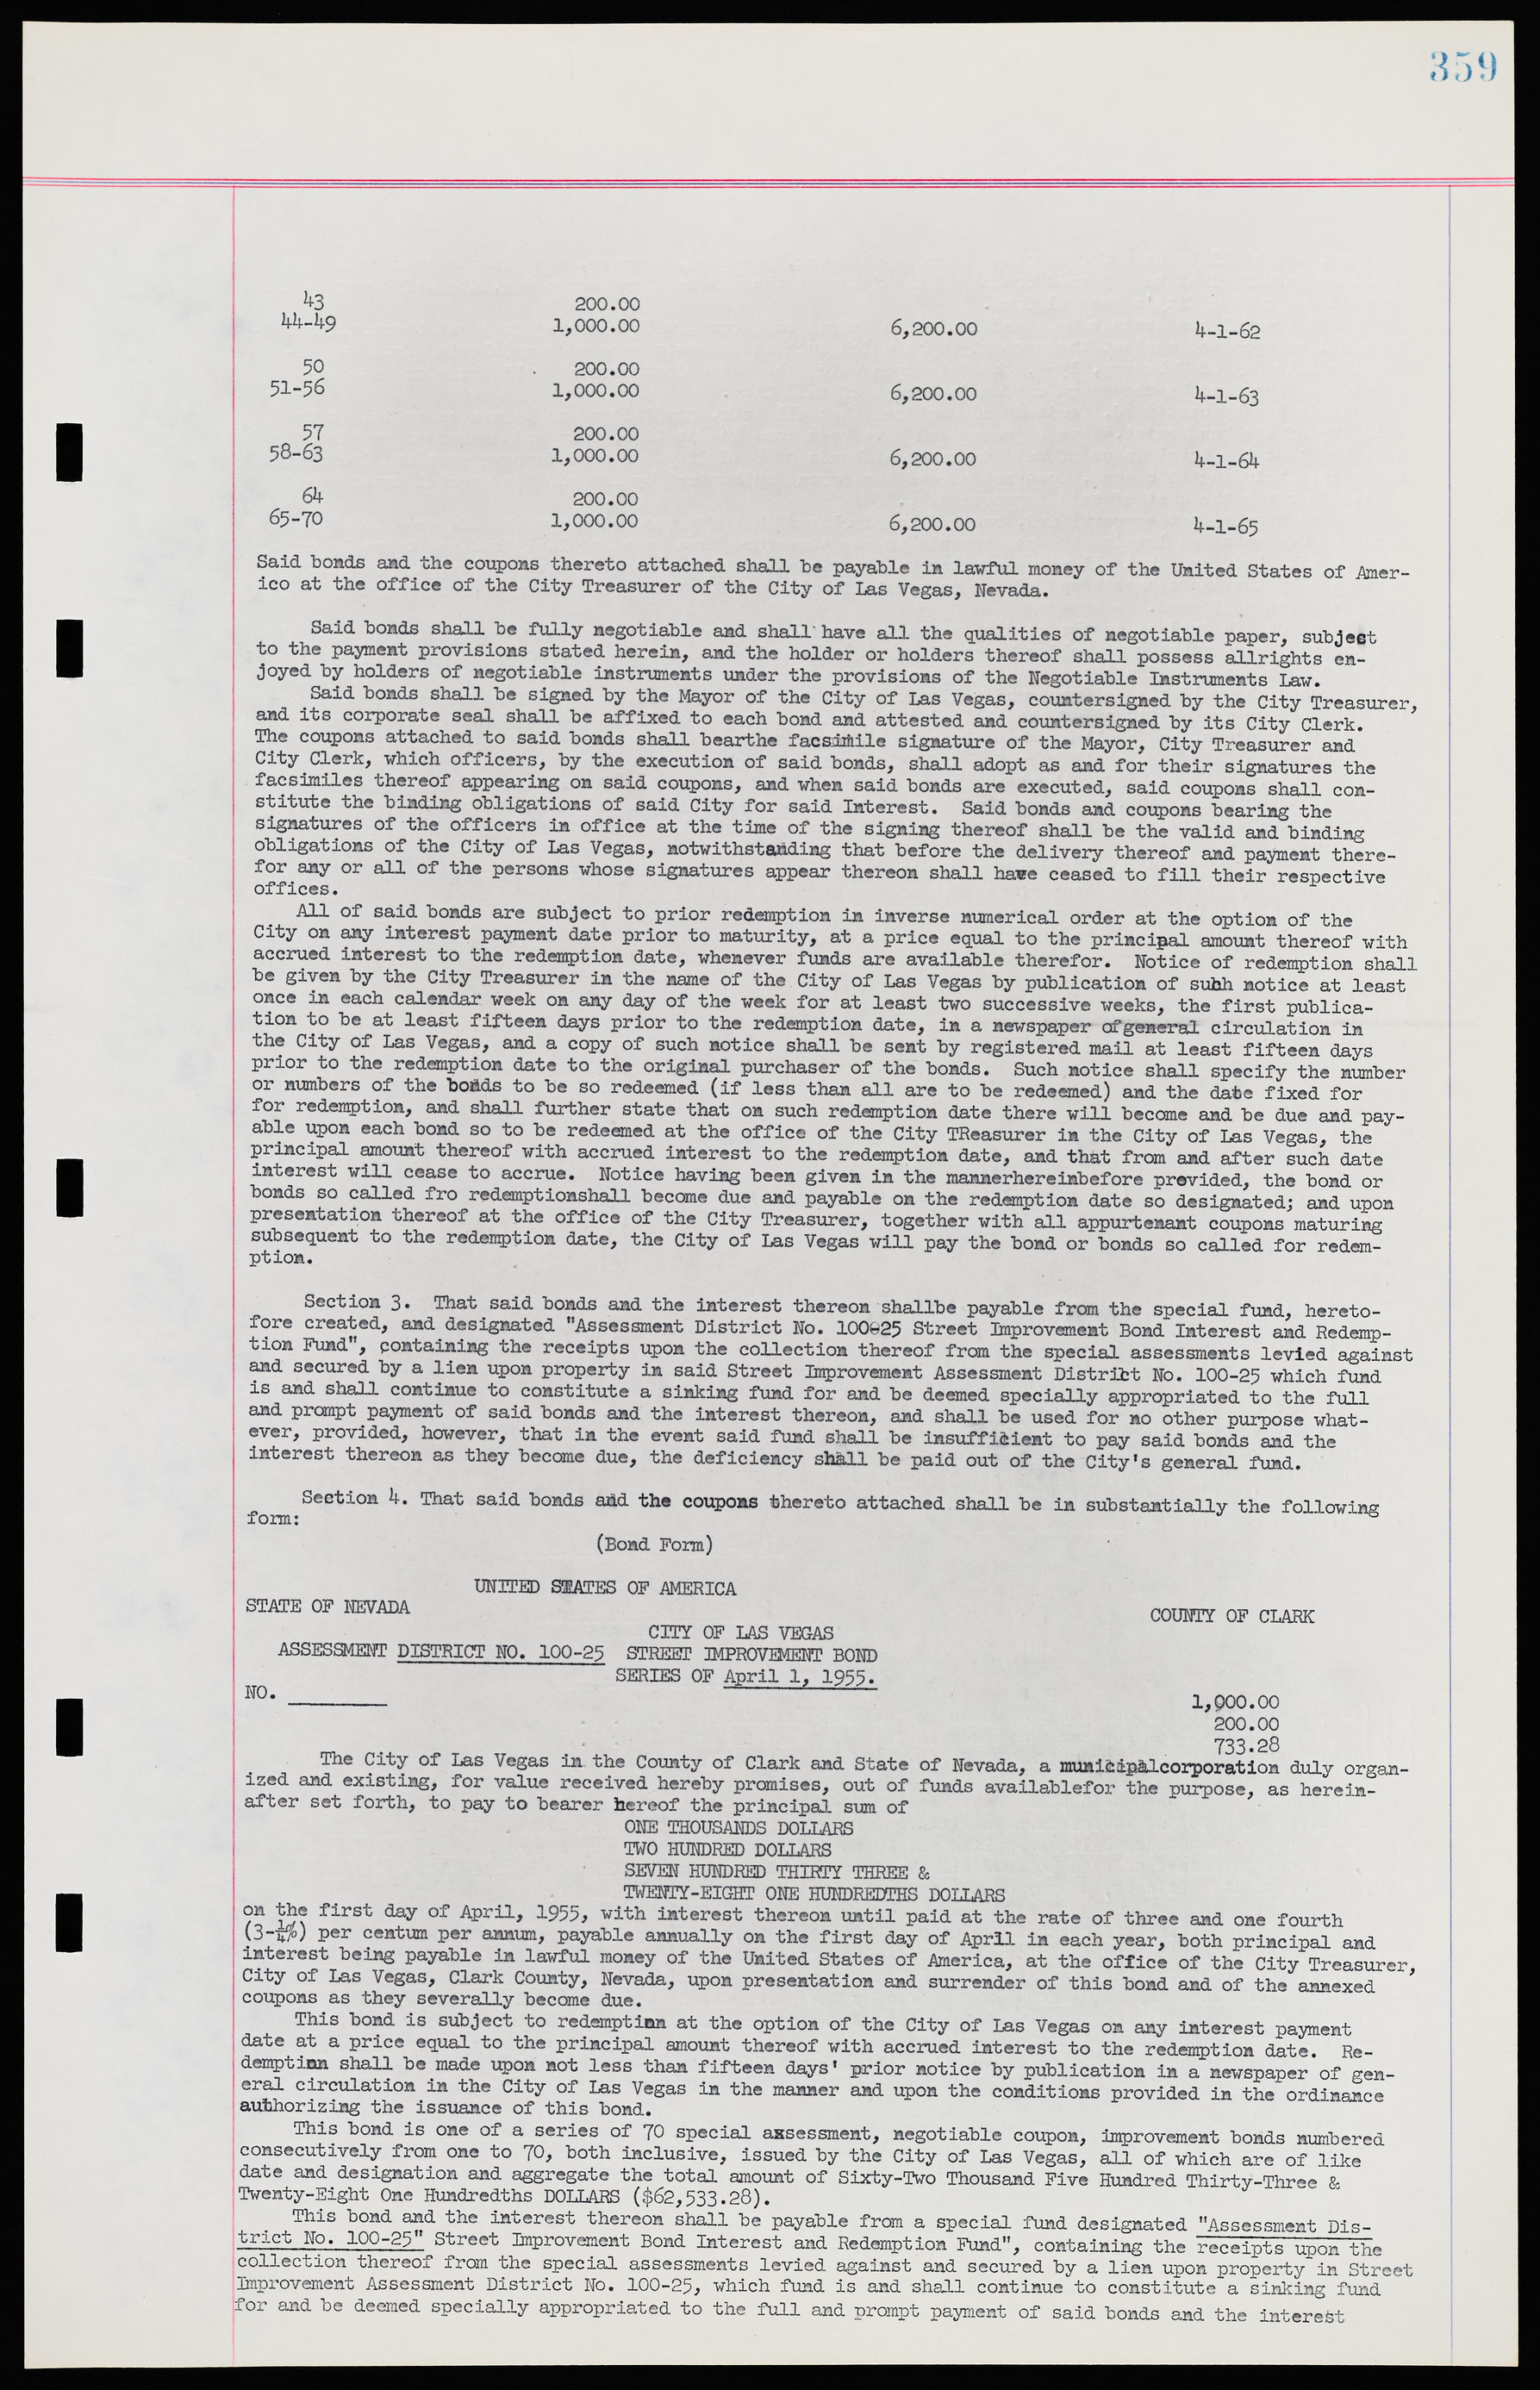 Las Vegas City Ordinances, November 13, 1950 to August 6, 1958, lvc000015-367